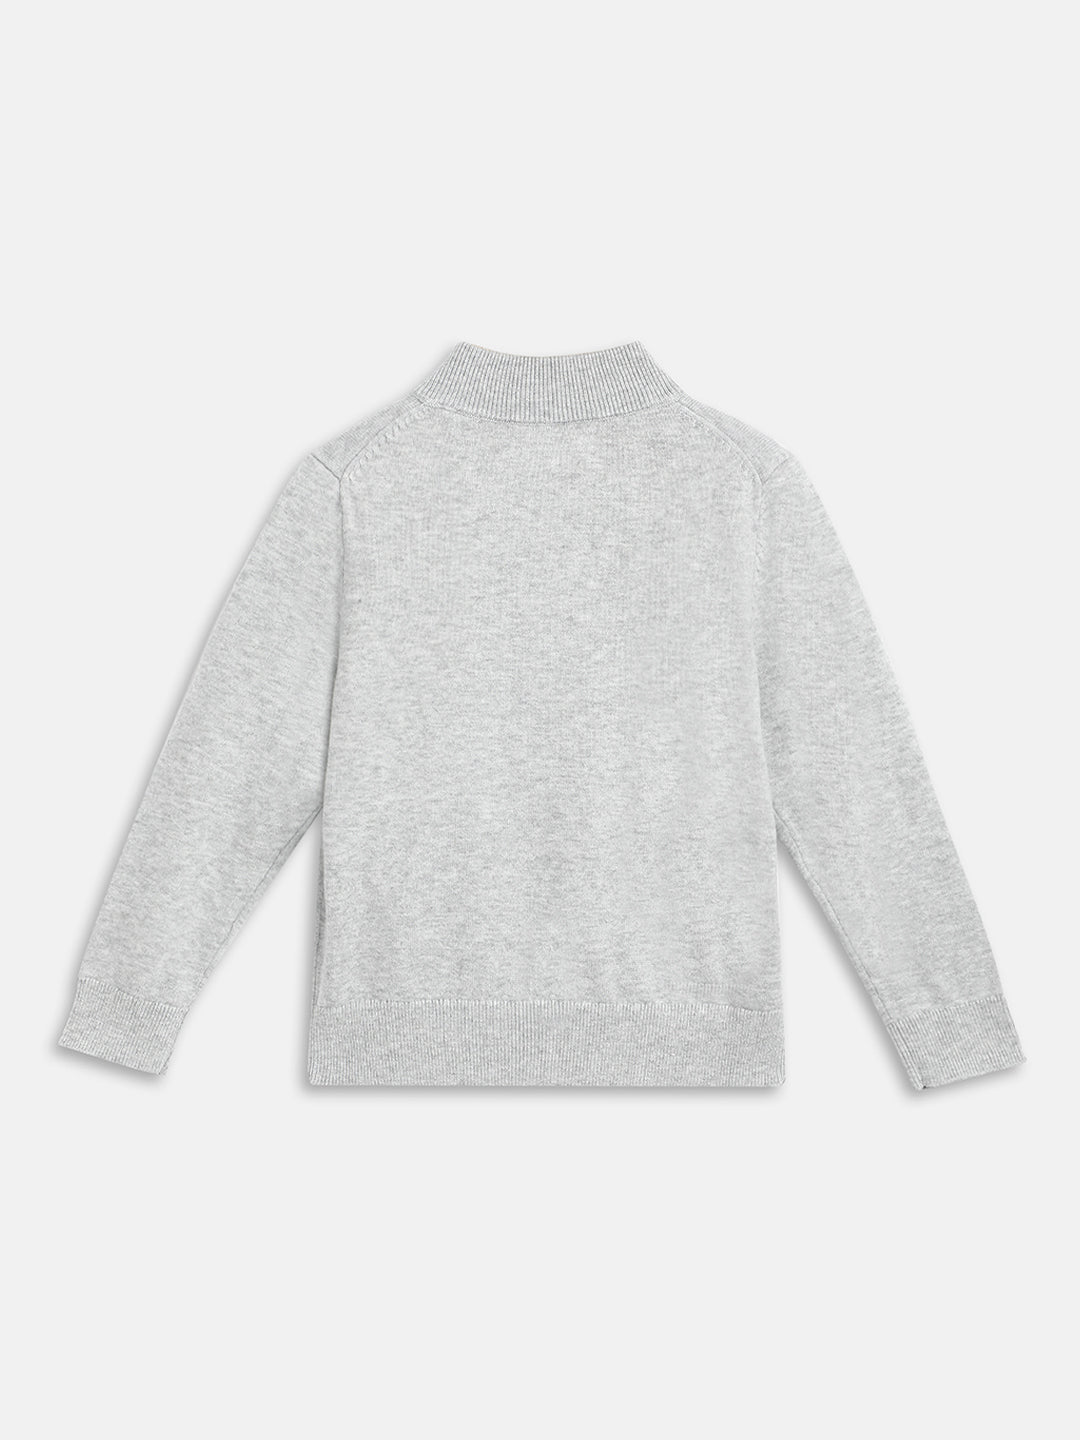 Gant Boys Grey Solid High Neck Sweater